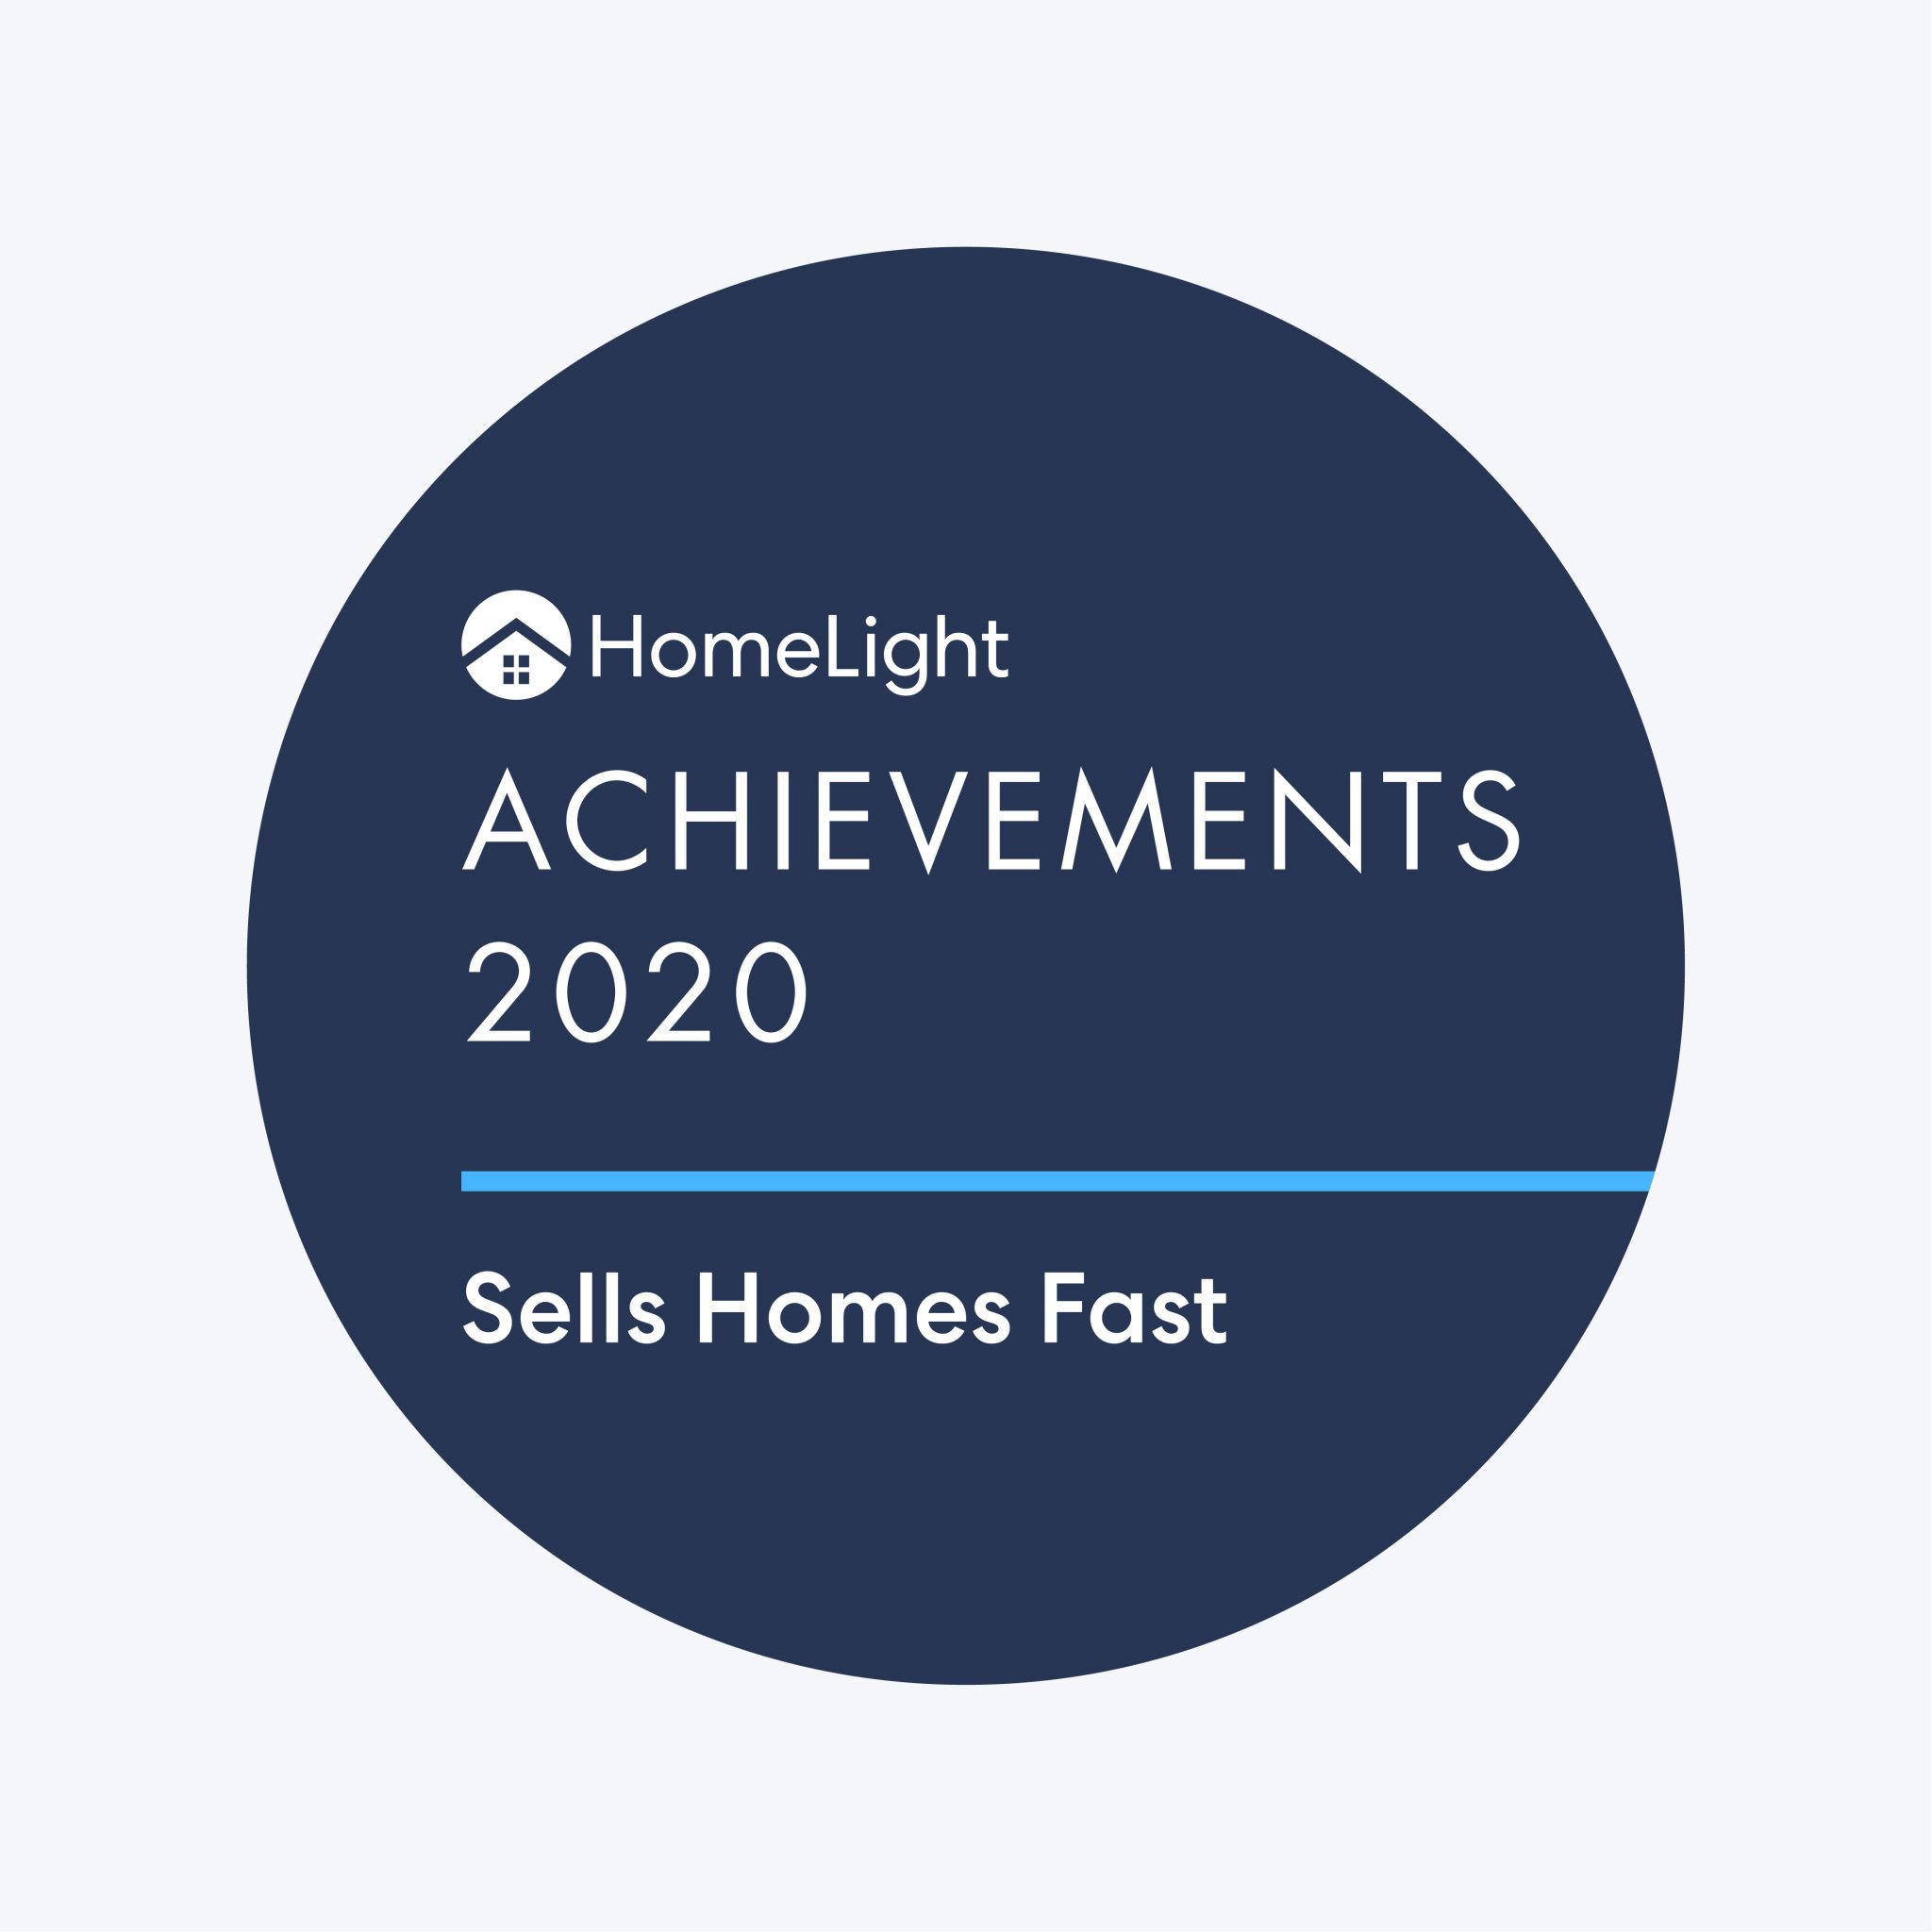 homelight sells homes fast award